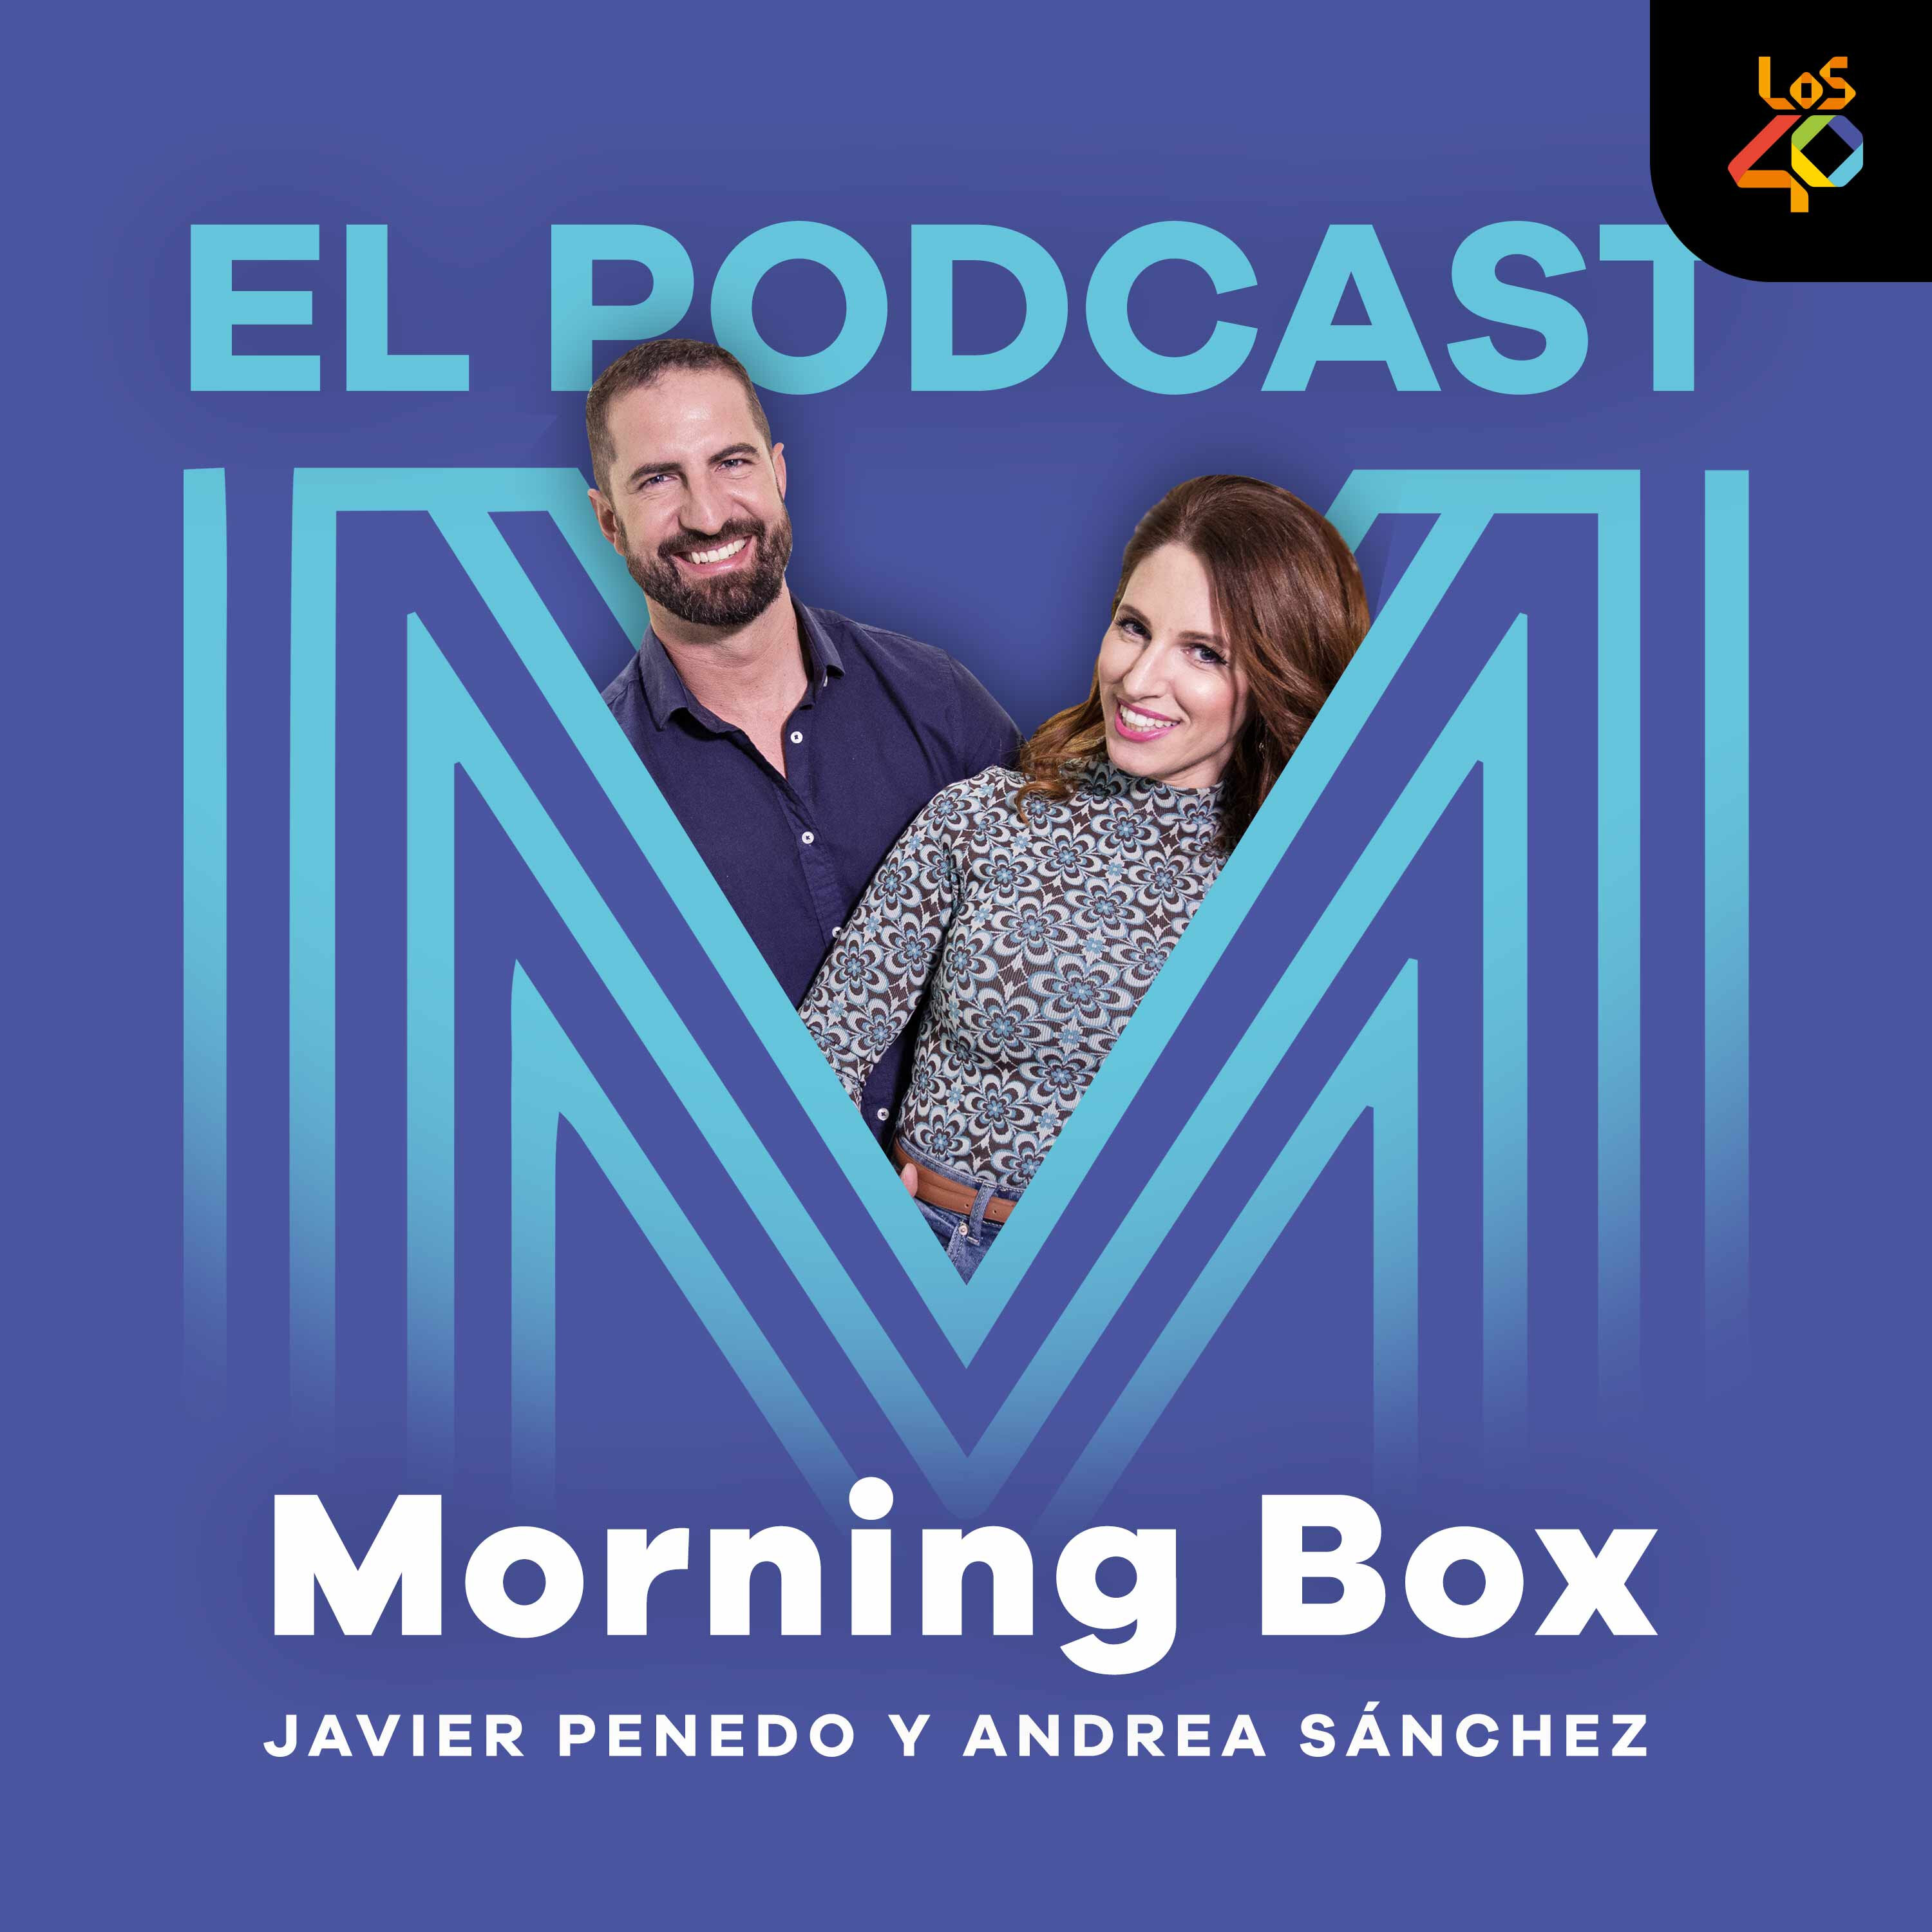 Morning Box (El Podcast):Javier Penedo y Andrea Sánchez